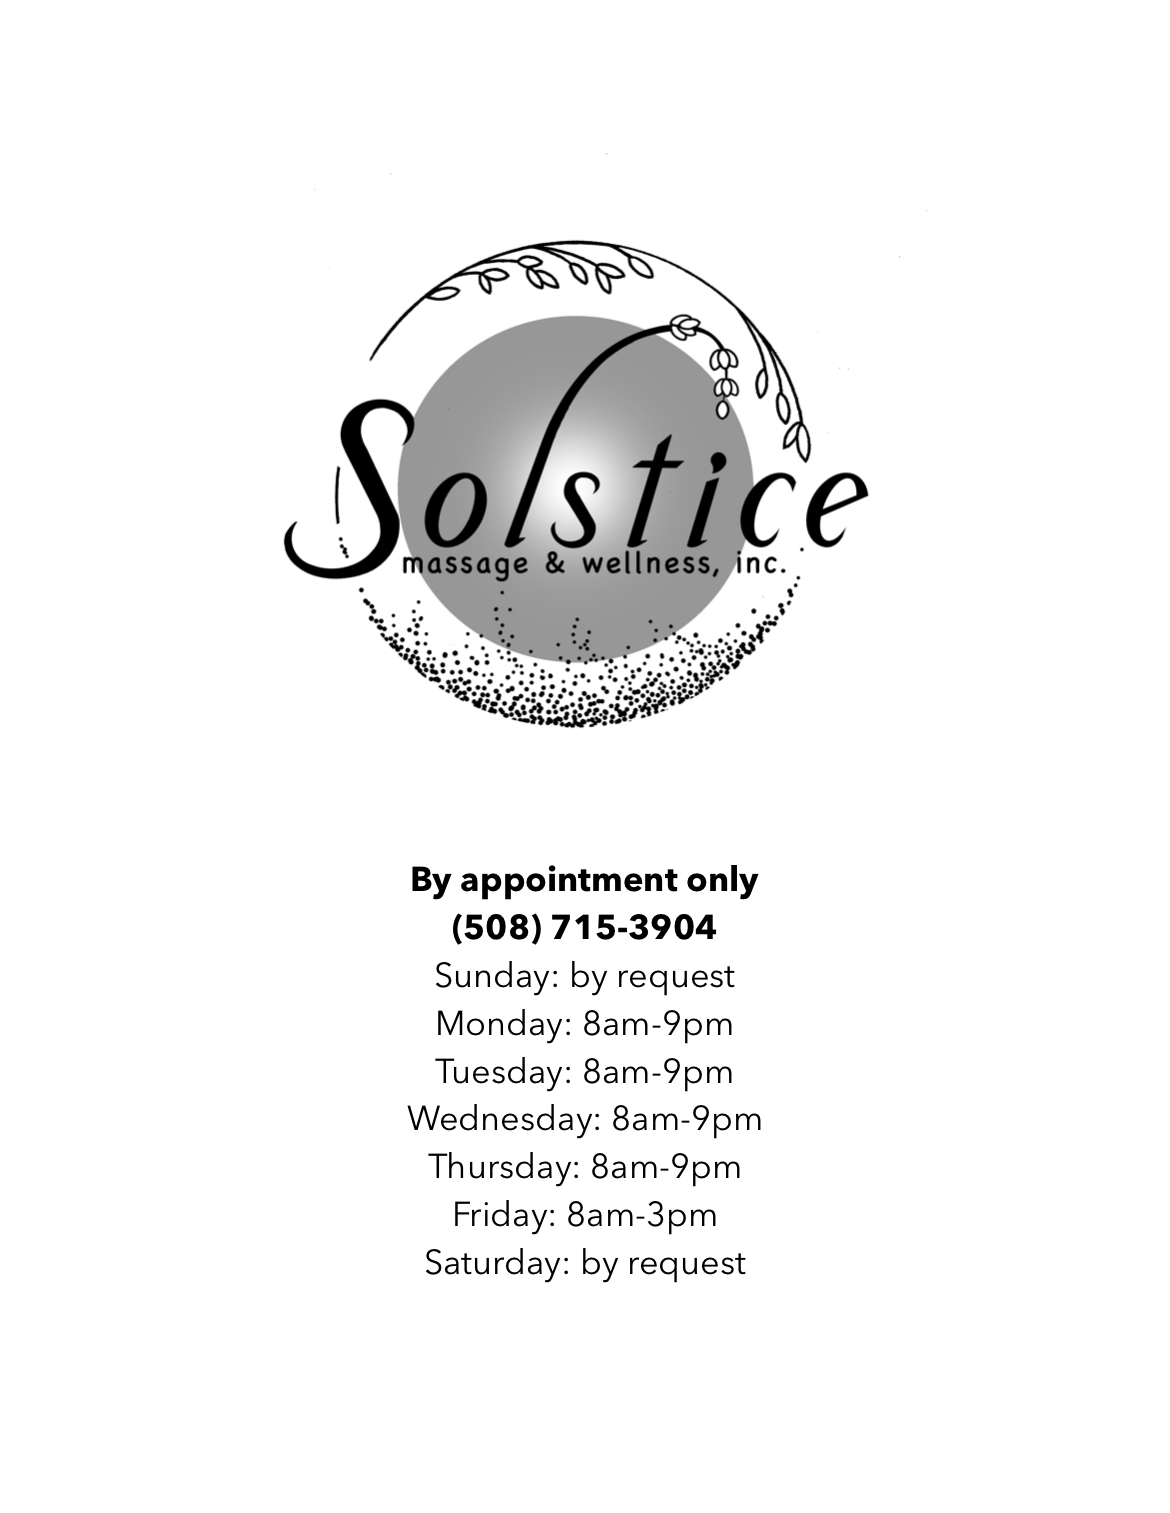 Solstice Massage & Wellness Inc. 19b Maple St, Spencer Massachusetts 01562